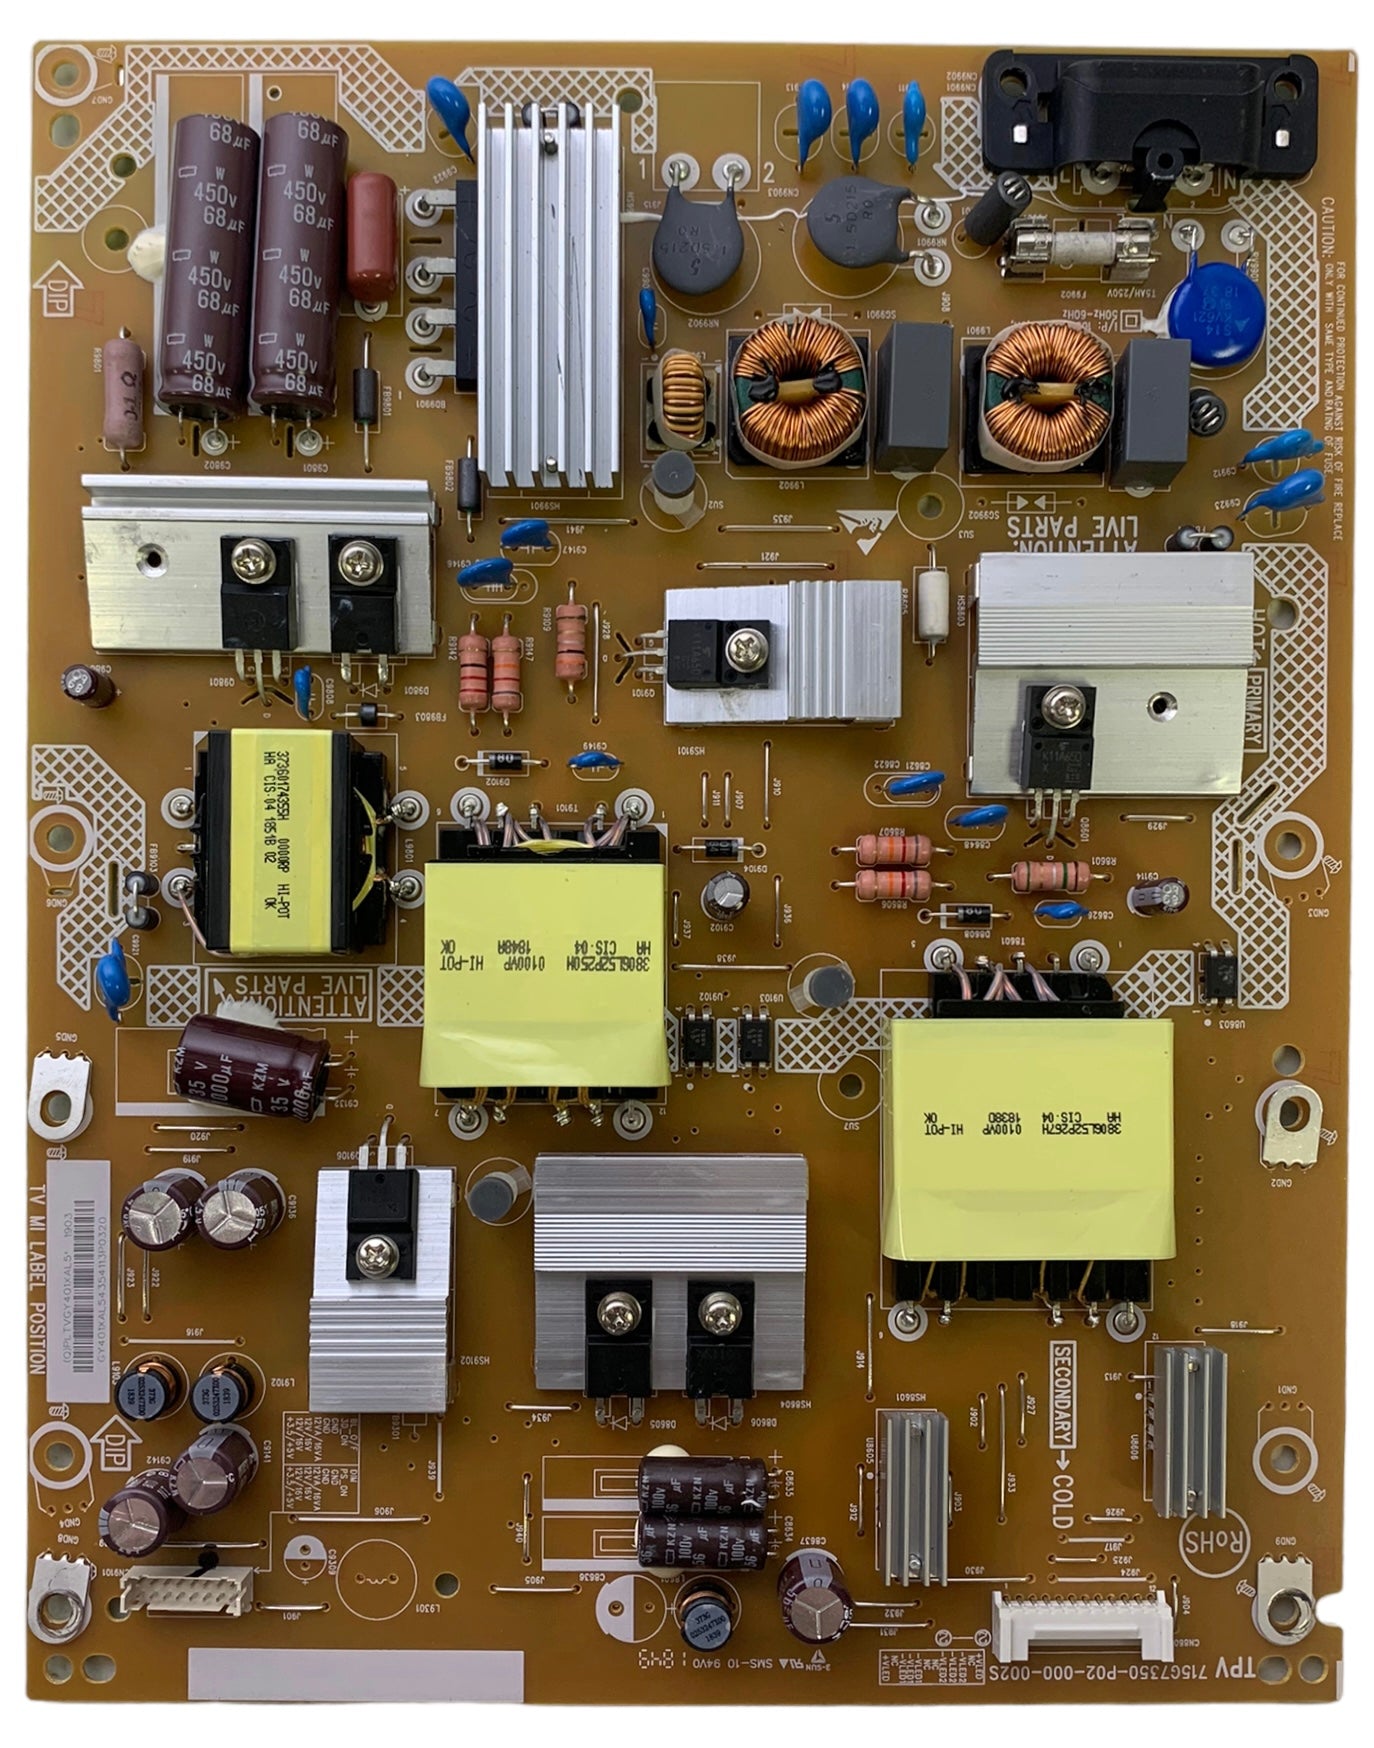 NEC PLTVGY401XAL5 Power Supply/LED Driver Board for E506